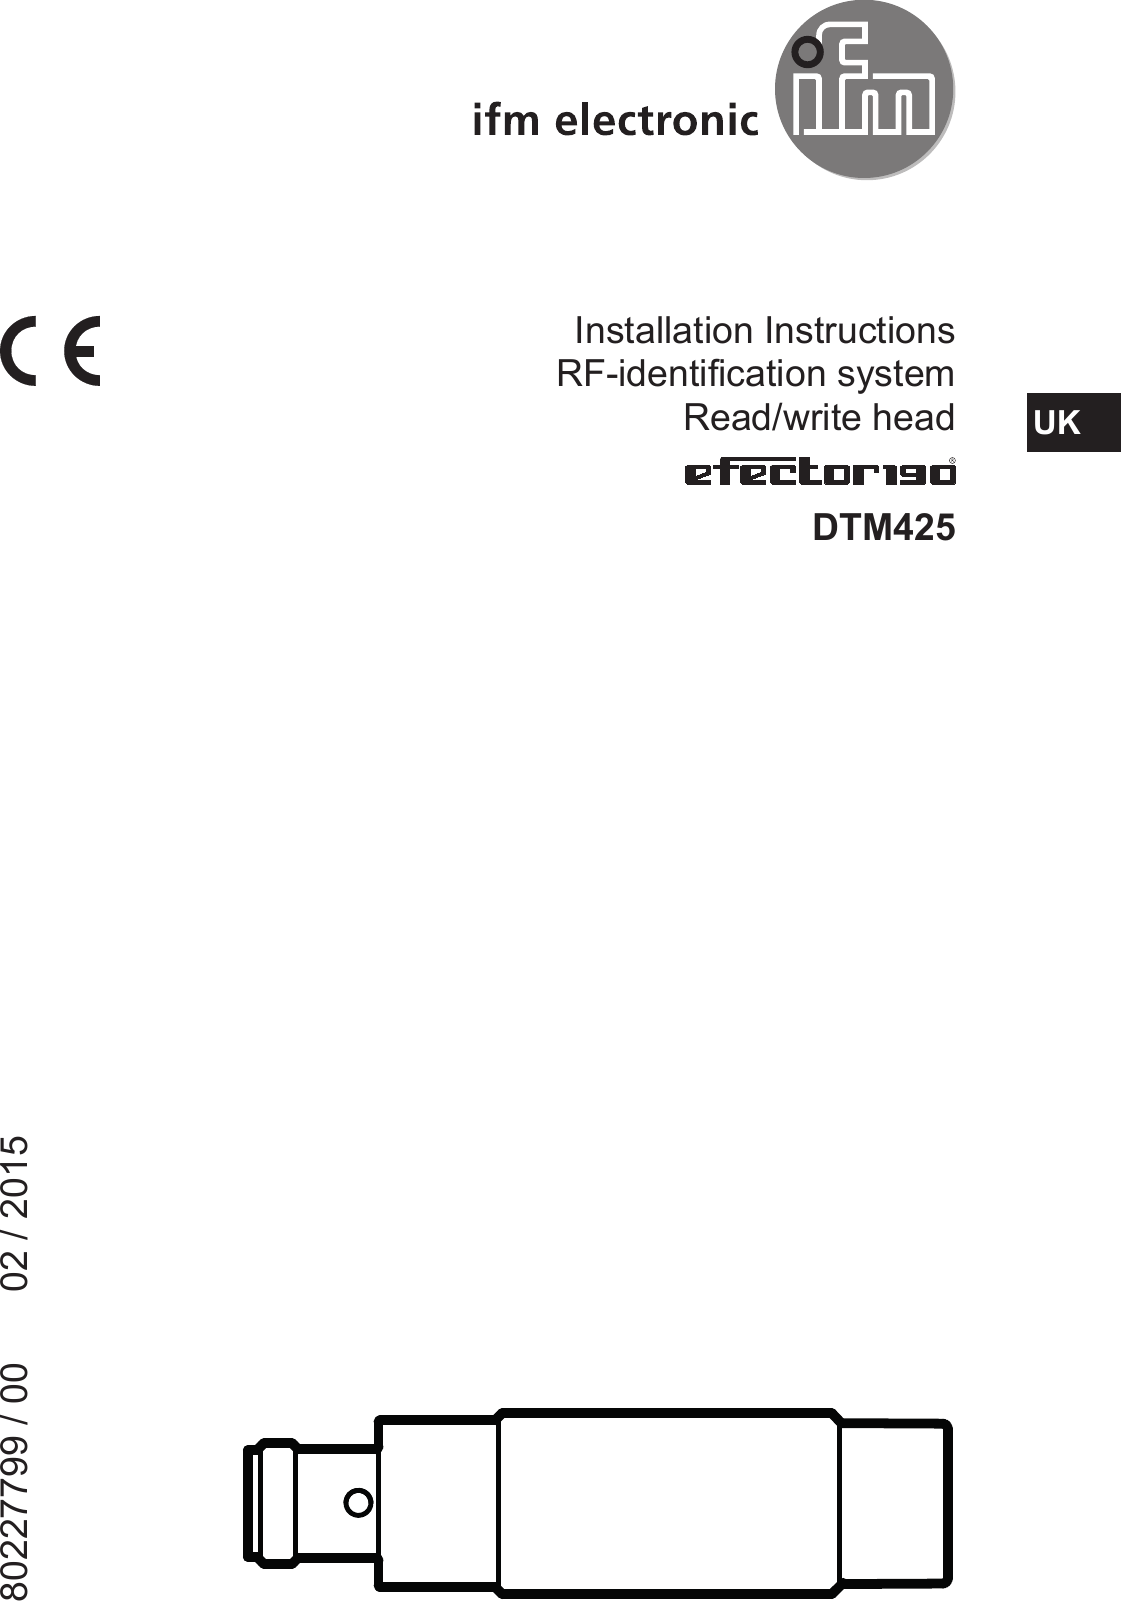 Installation Instructions RF-identification system Read/write headDTM425 80227799 / 00    02 / 2015UK